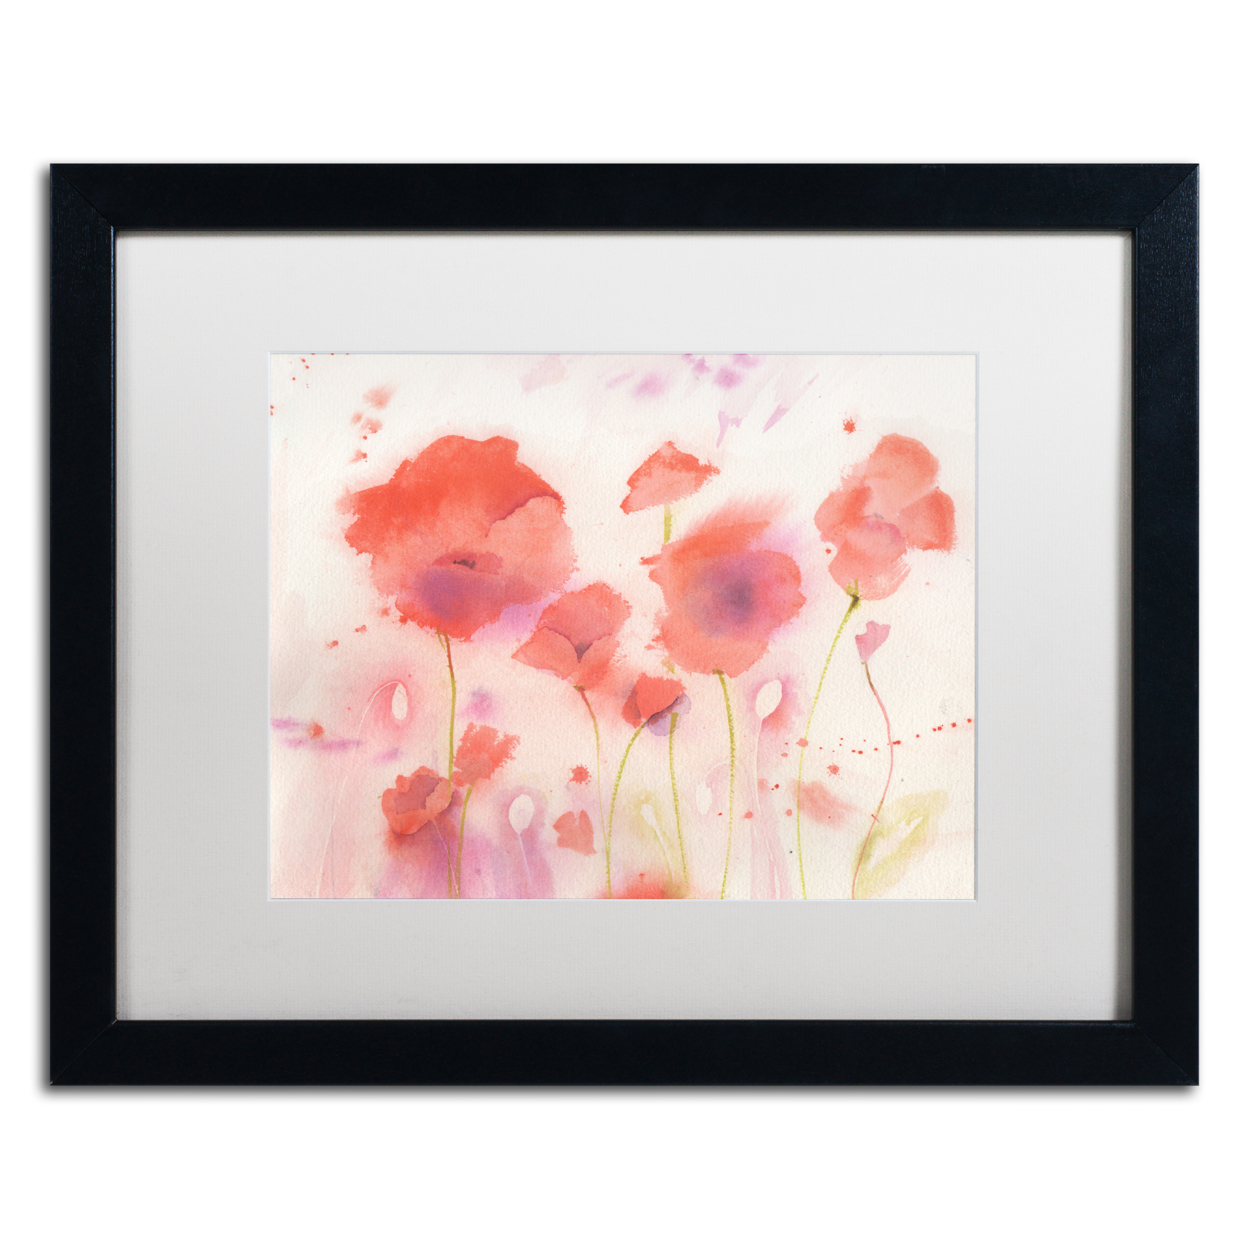 Sheila Golden 'Poppy Memory' Black Wooden Framed Art 18 X 22 Inches